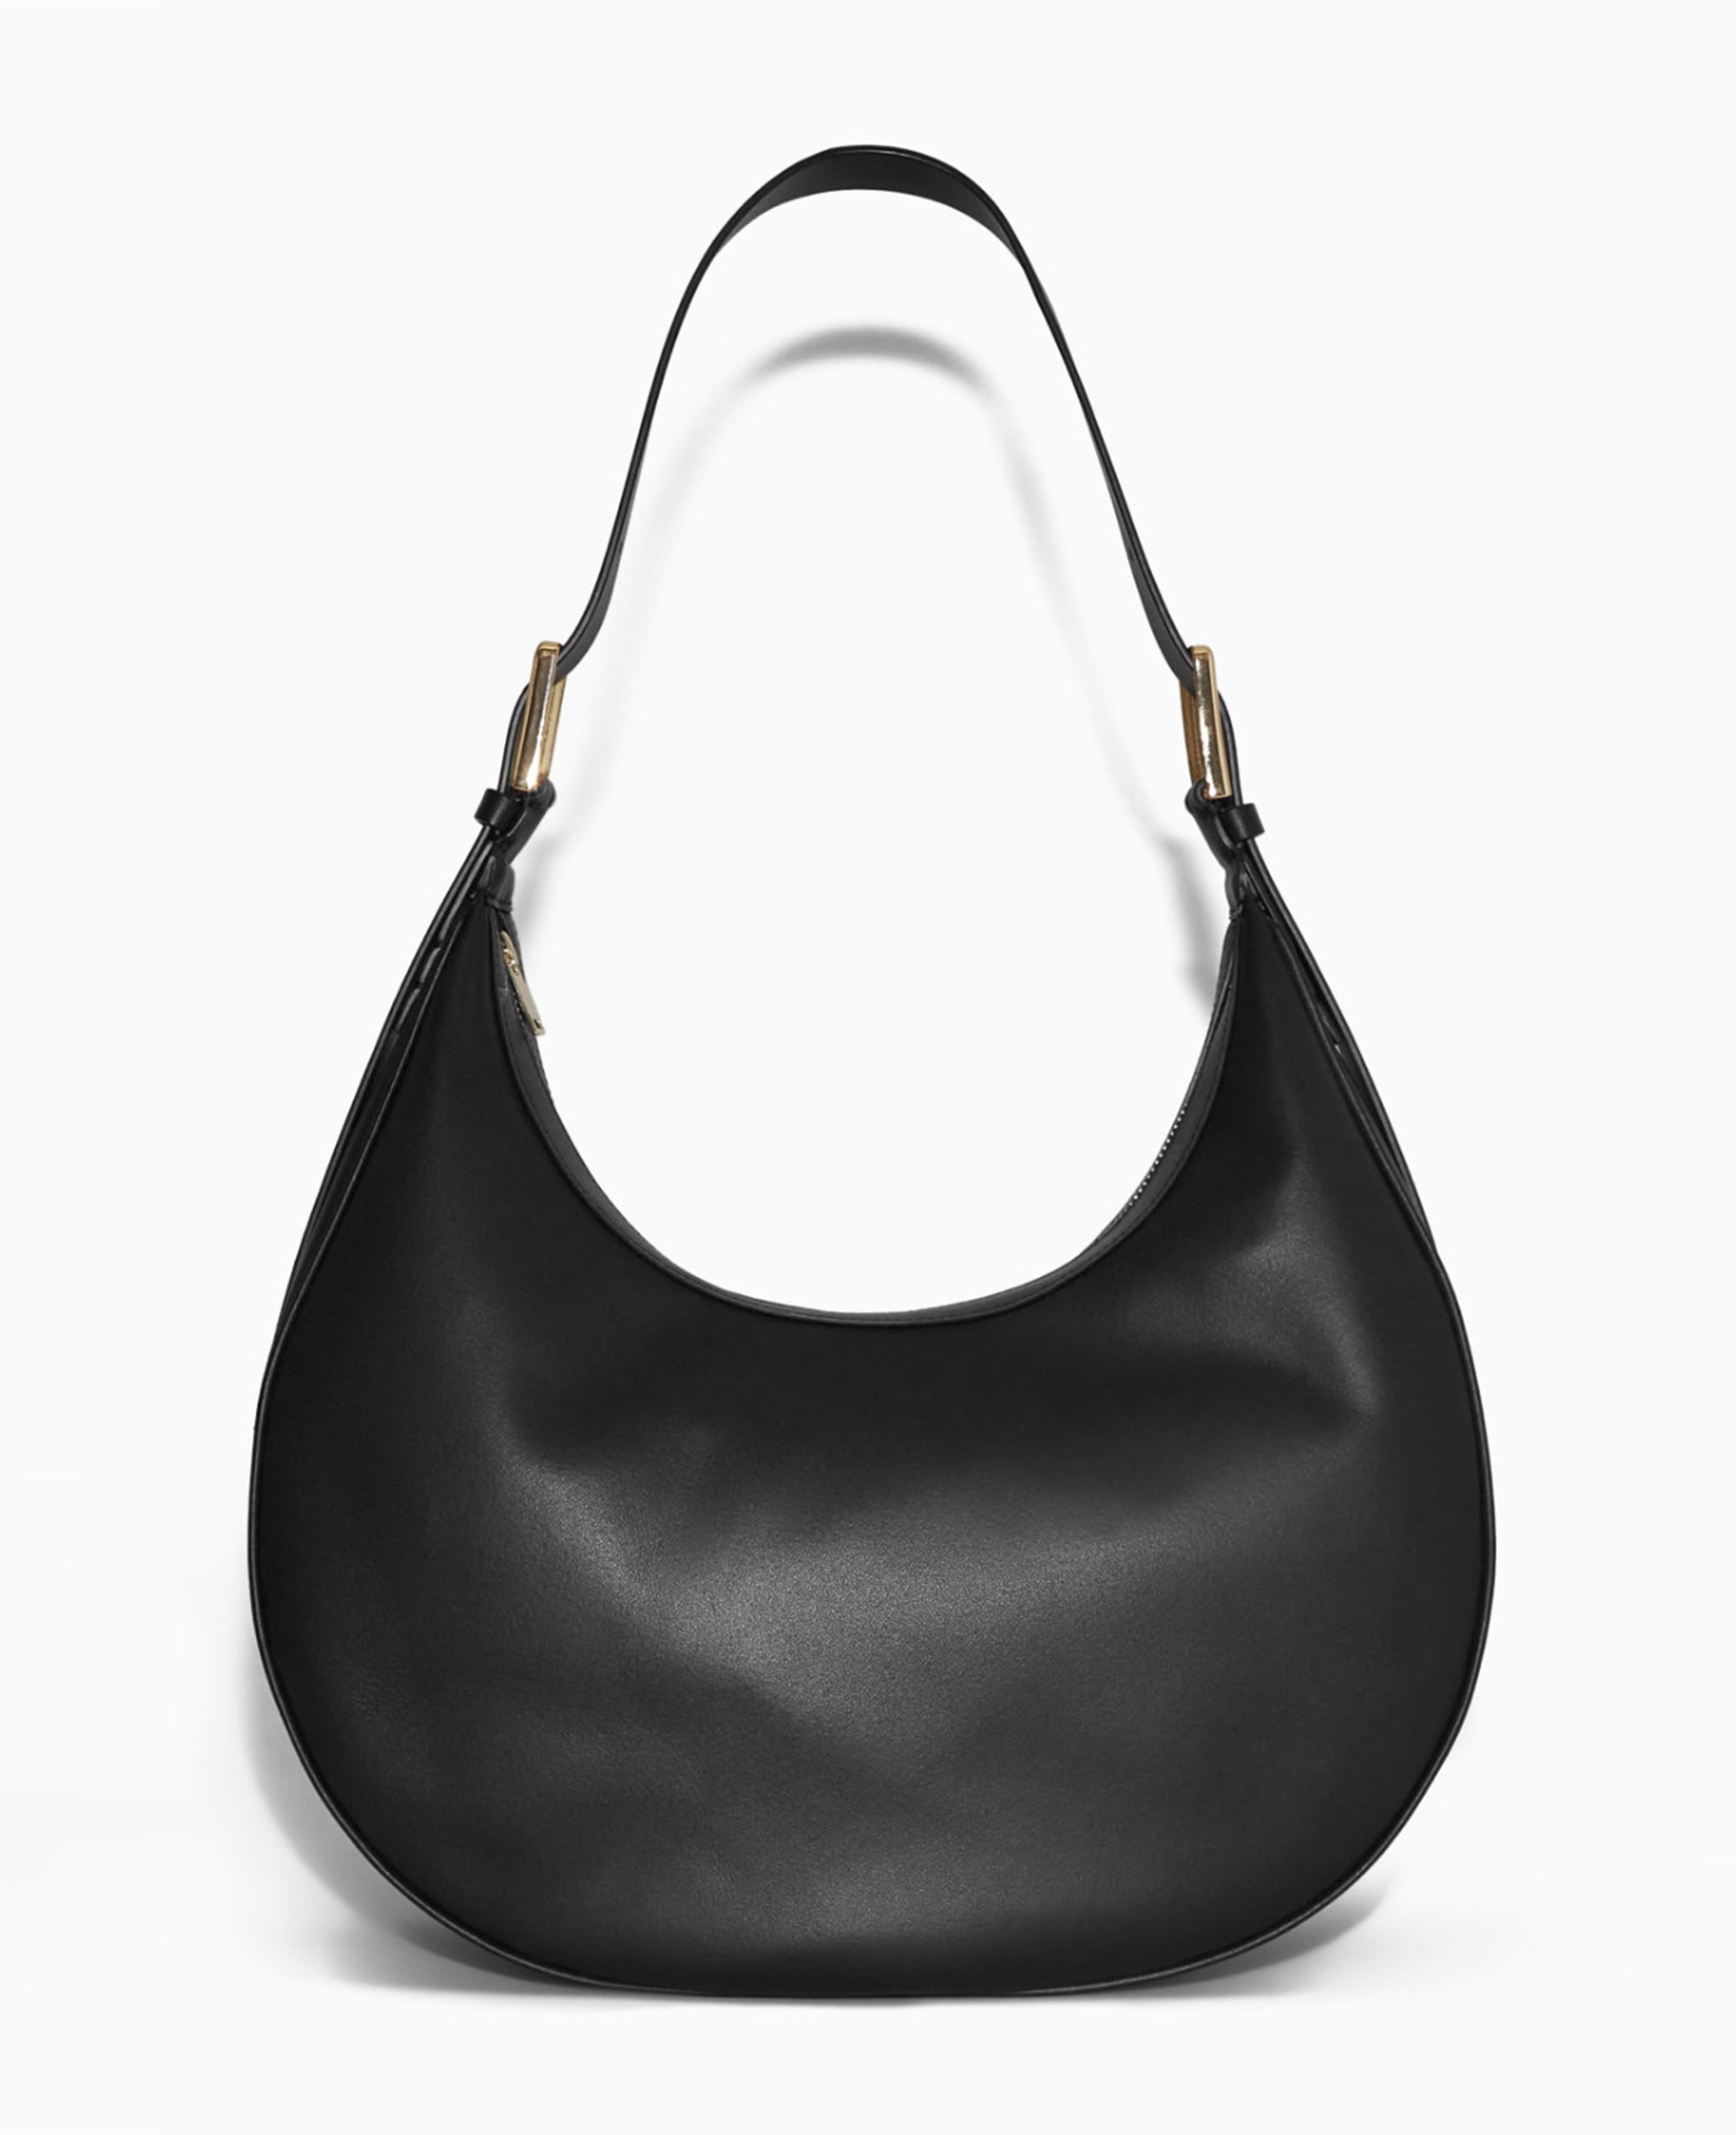 High street handbags that look like Prada bag dupes - The Mail